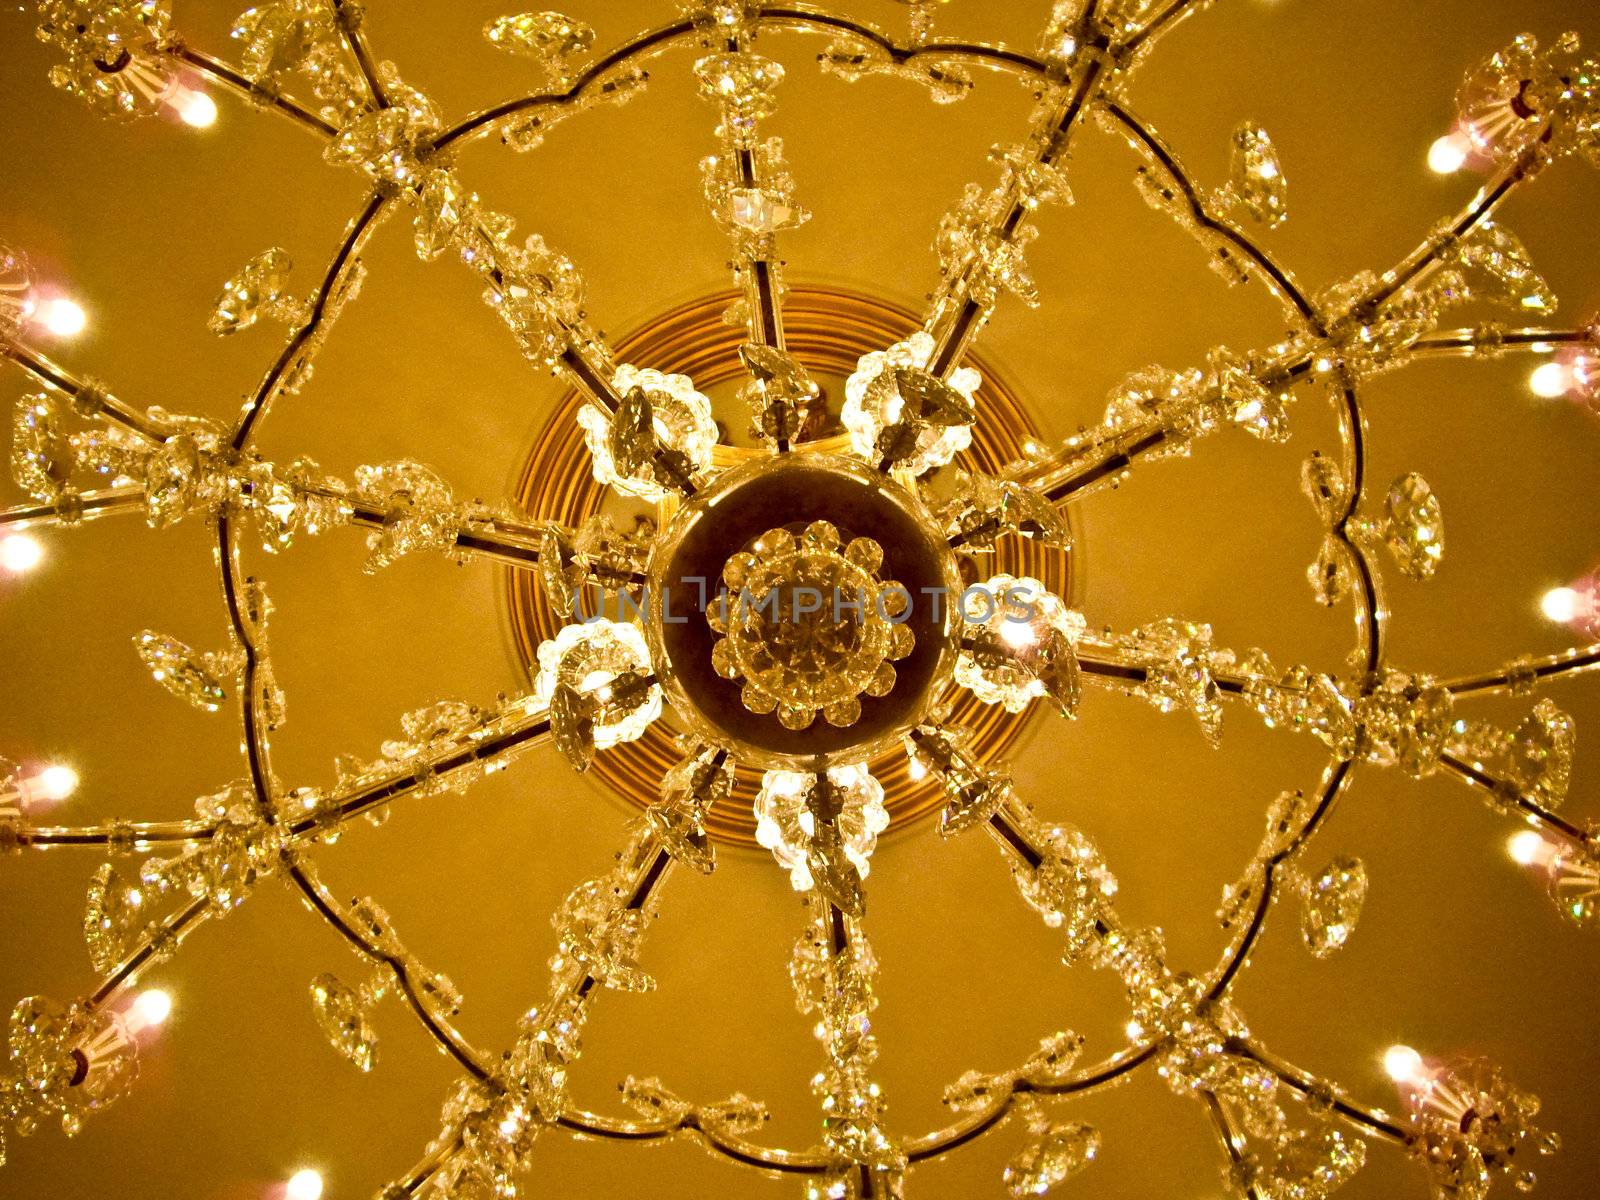 Light design on a Golden ceiling